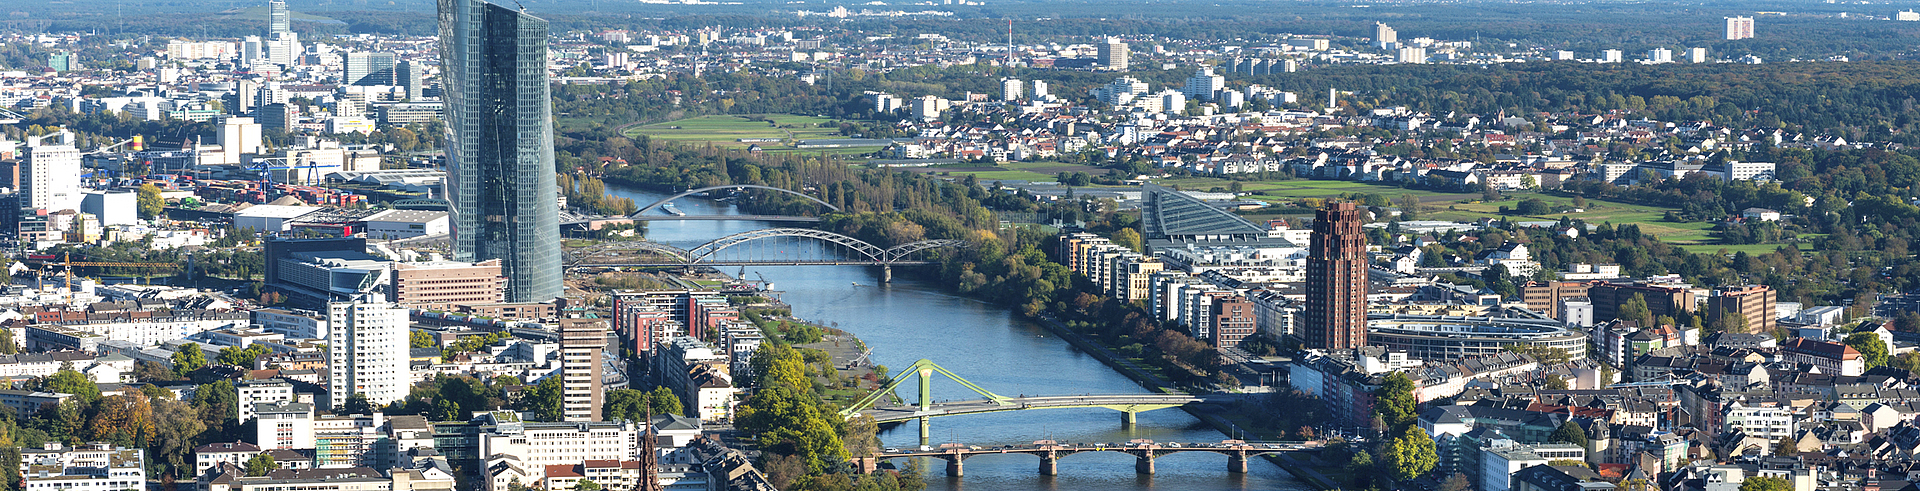 BWV Rhein Main Frankfurt Fortbildung